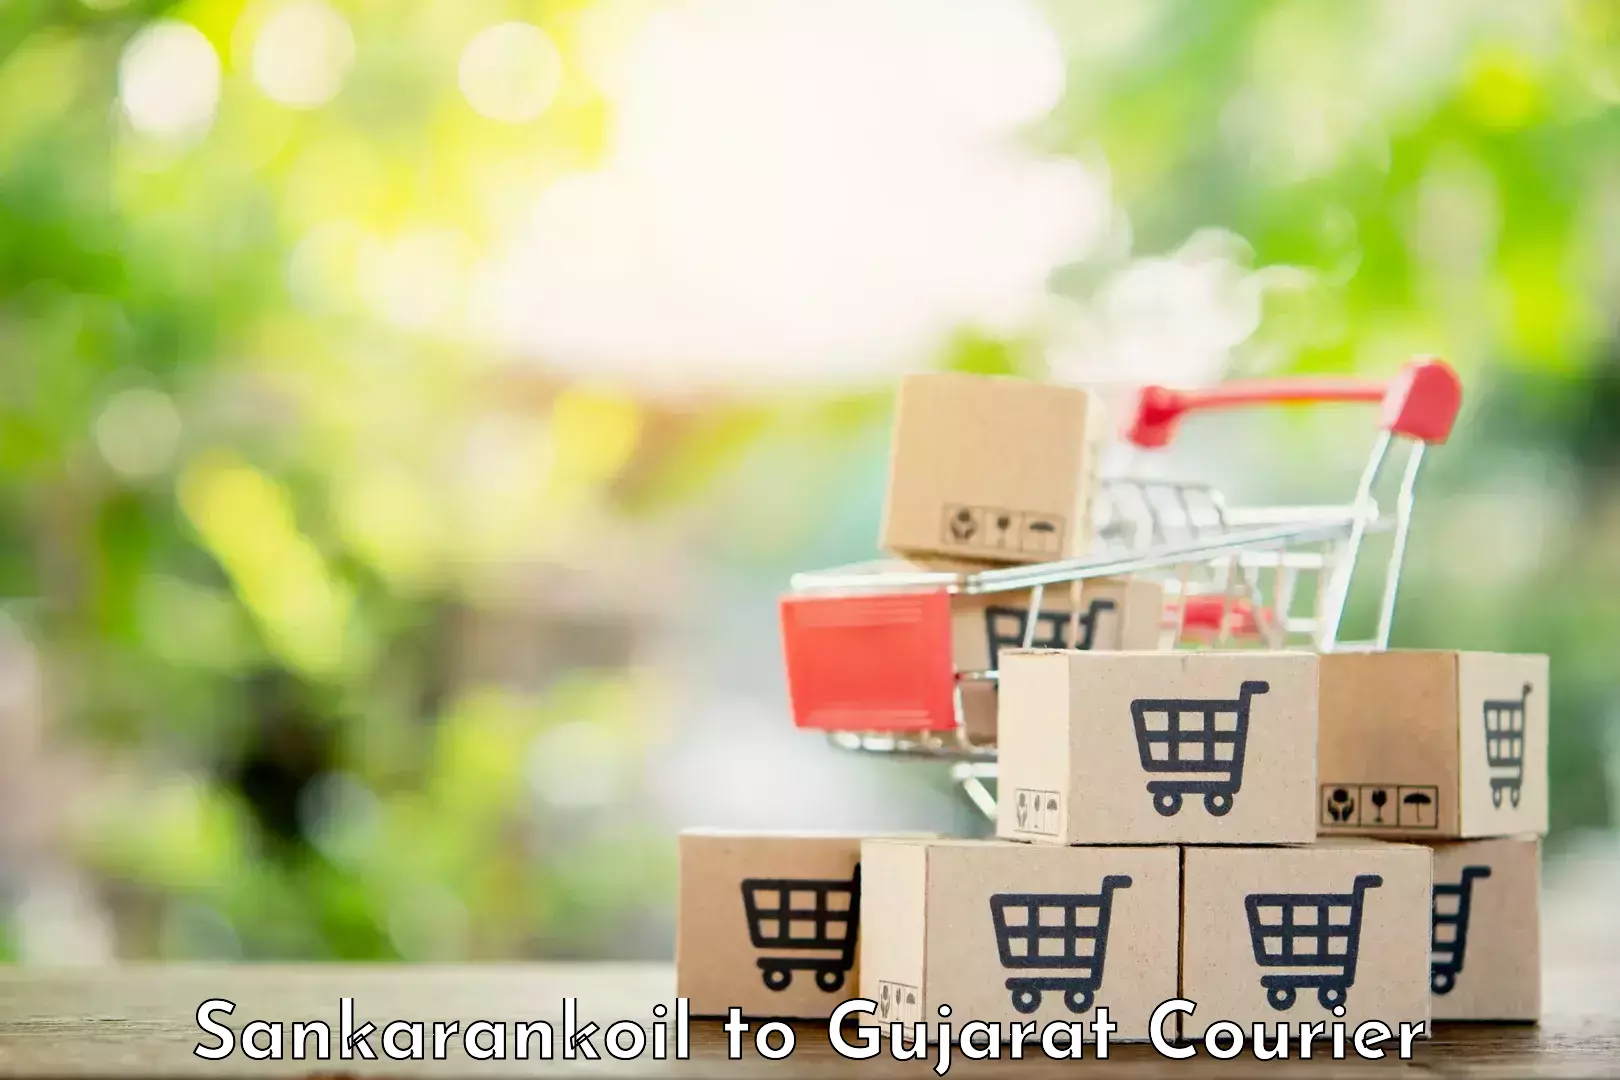 Reliable courier service Sankarankoil to Gujarat